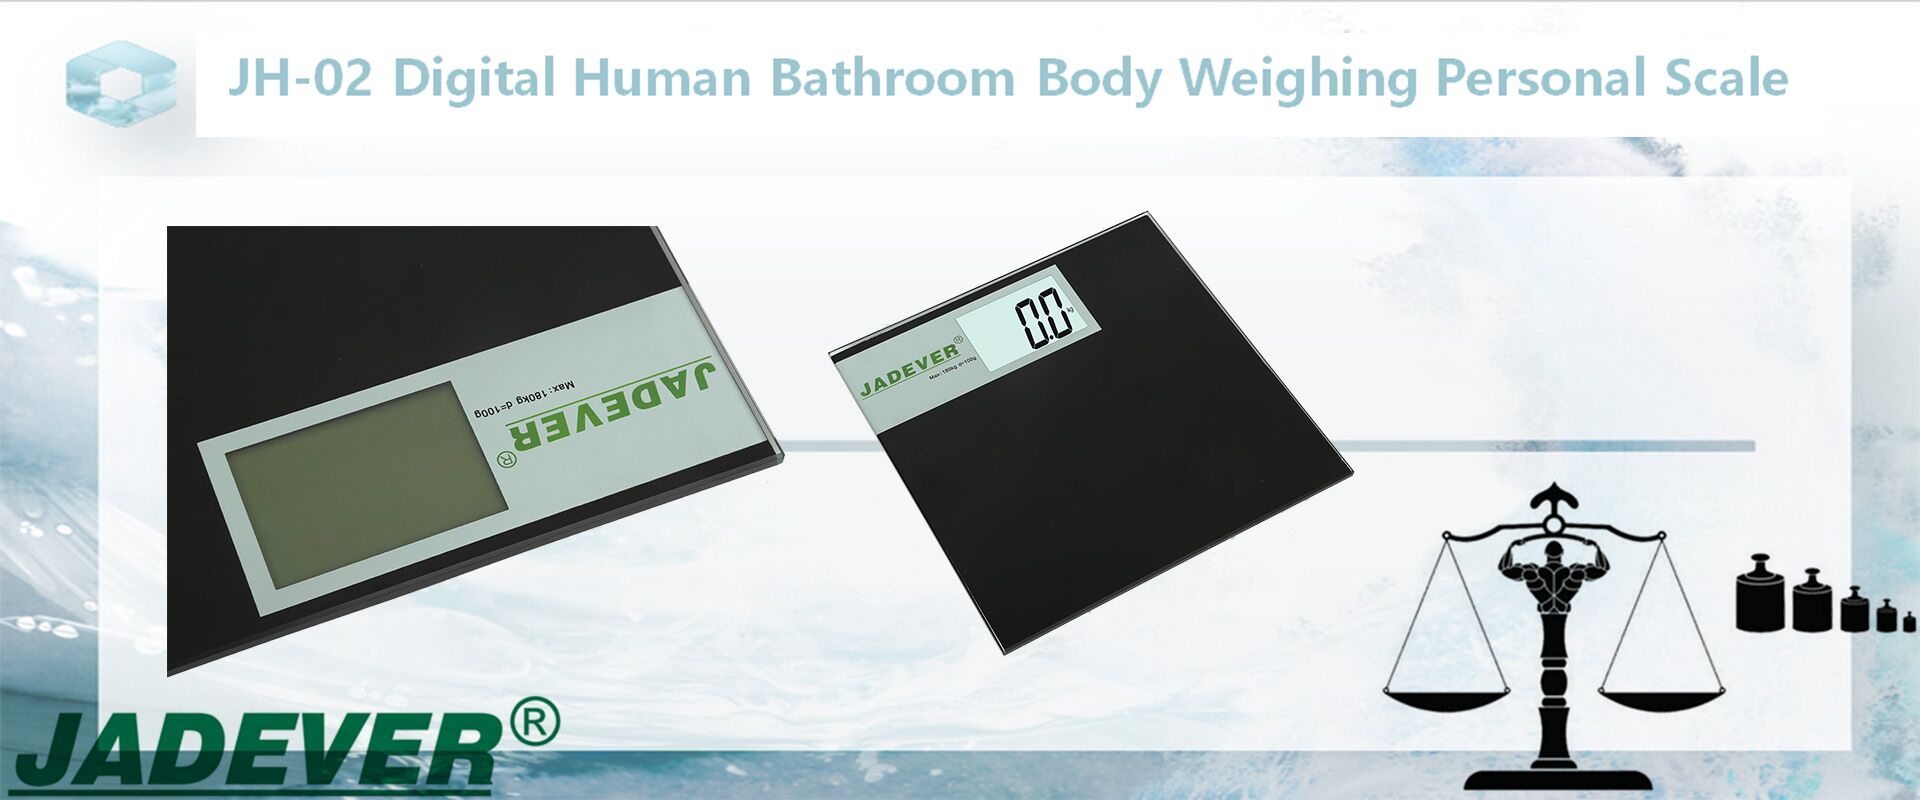 JH-02 Digital Human Bathroom Body Weighing Personal Scale